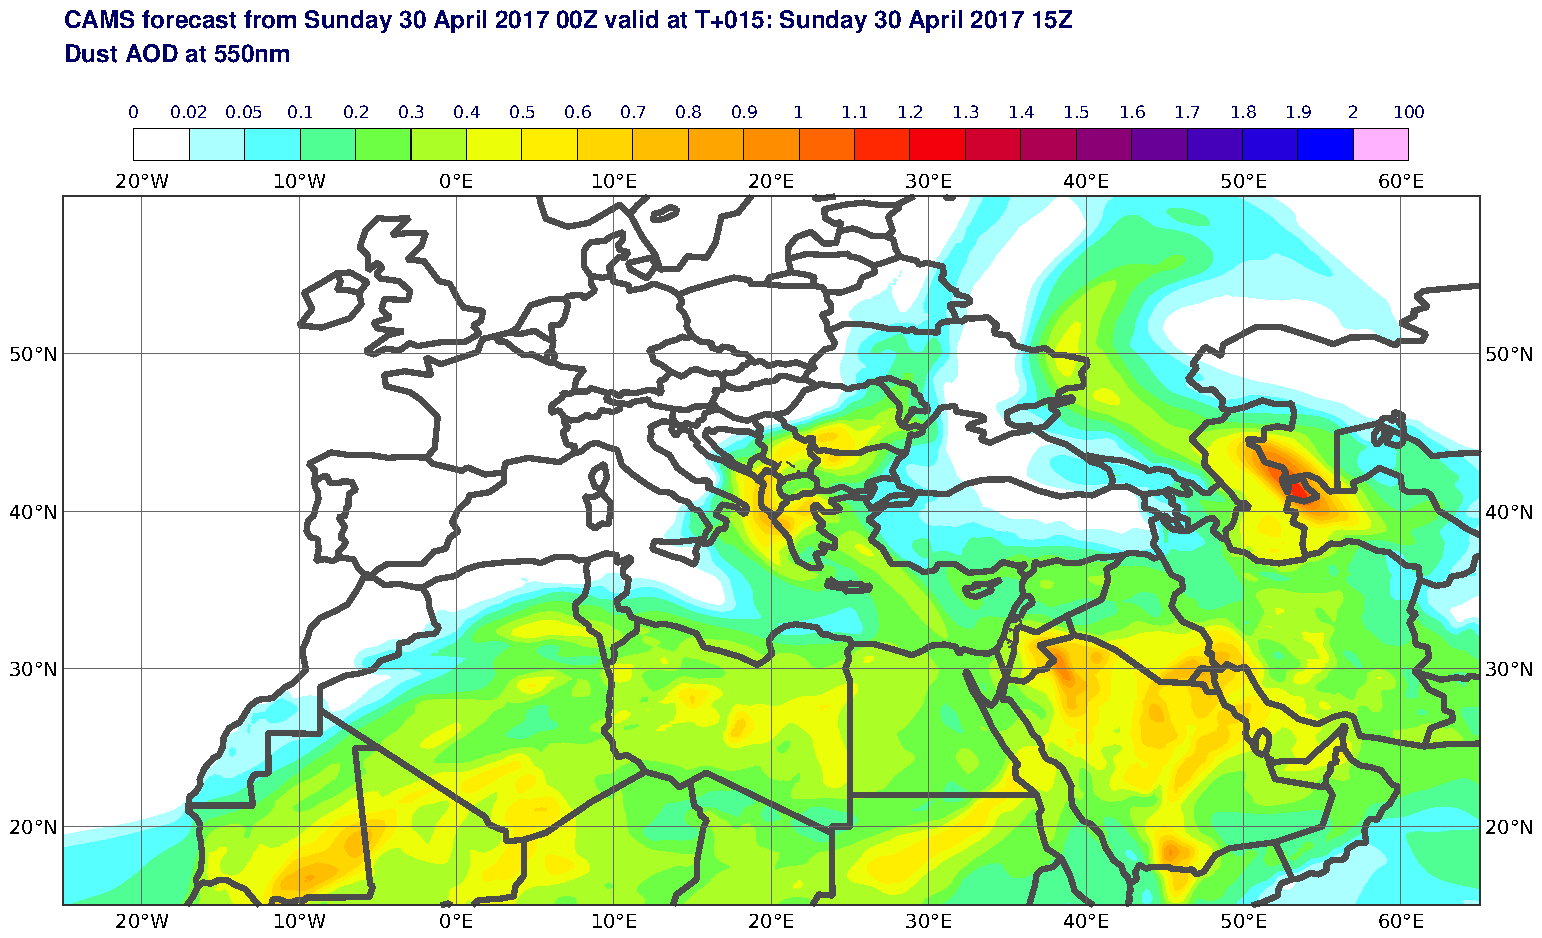 Dust AOD at 550nm valid at T15 - 2017-04-30 15:00